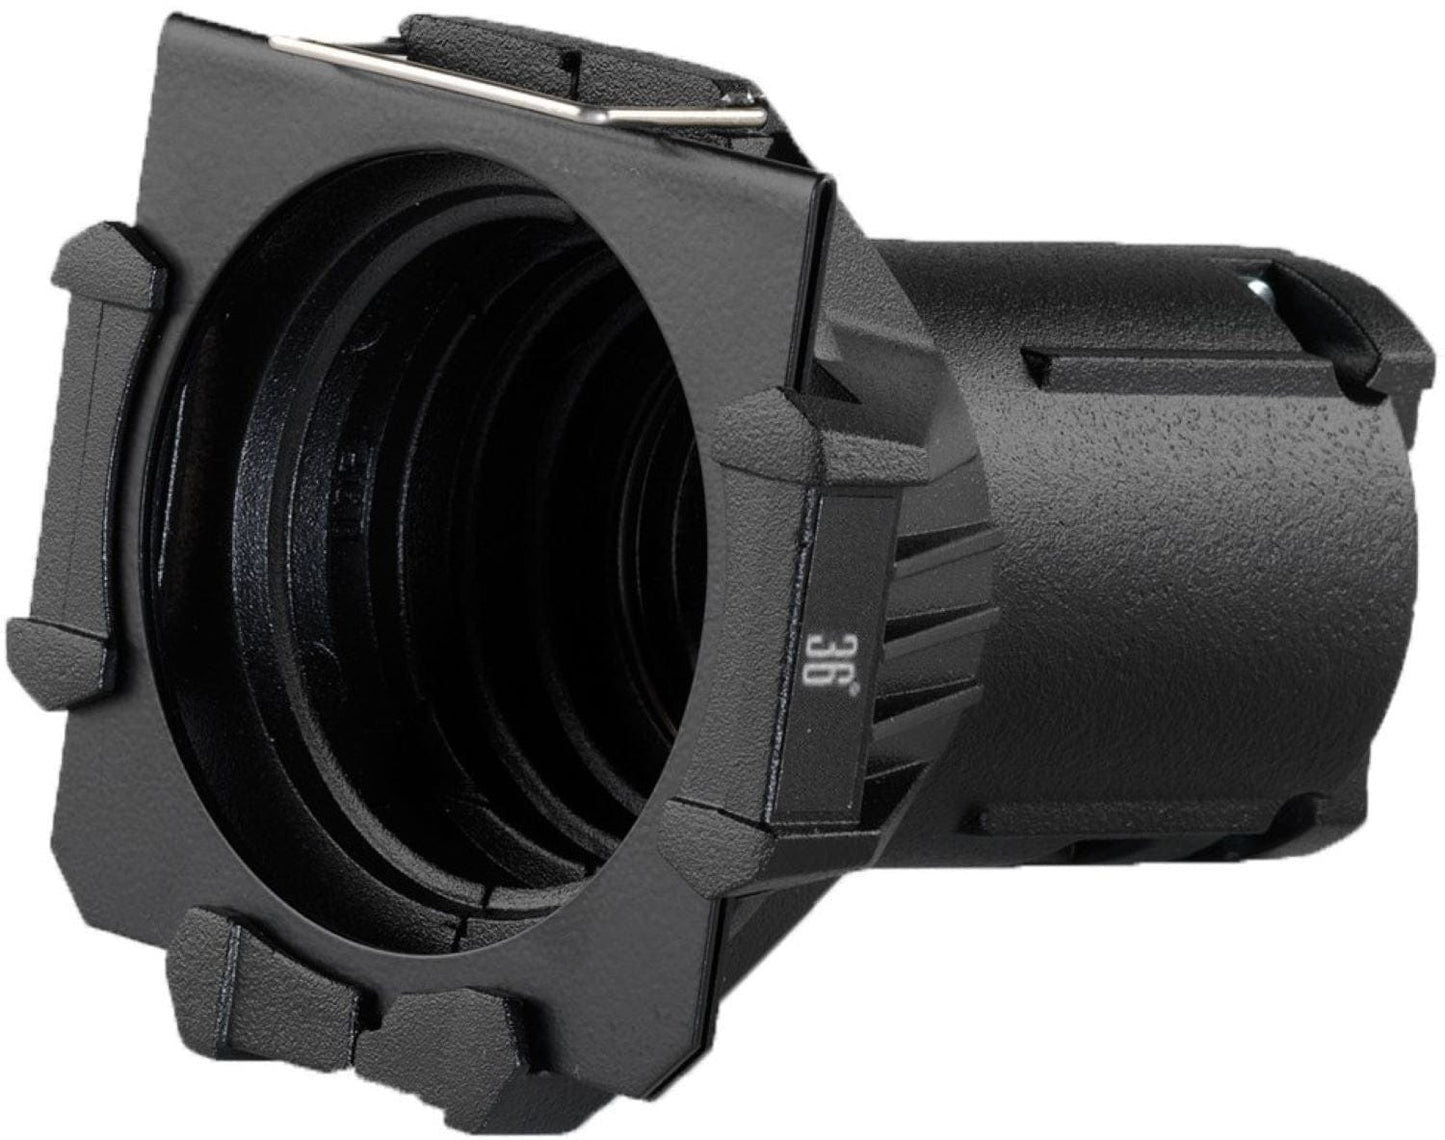 ETC Source Four Mini LED Ellipsoidal 5000 K, 36-Degree Lens Tube with Edison Plug - Black (Canopy) - PSSL ProSound and Stage Lighting